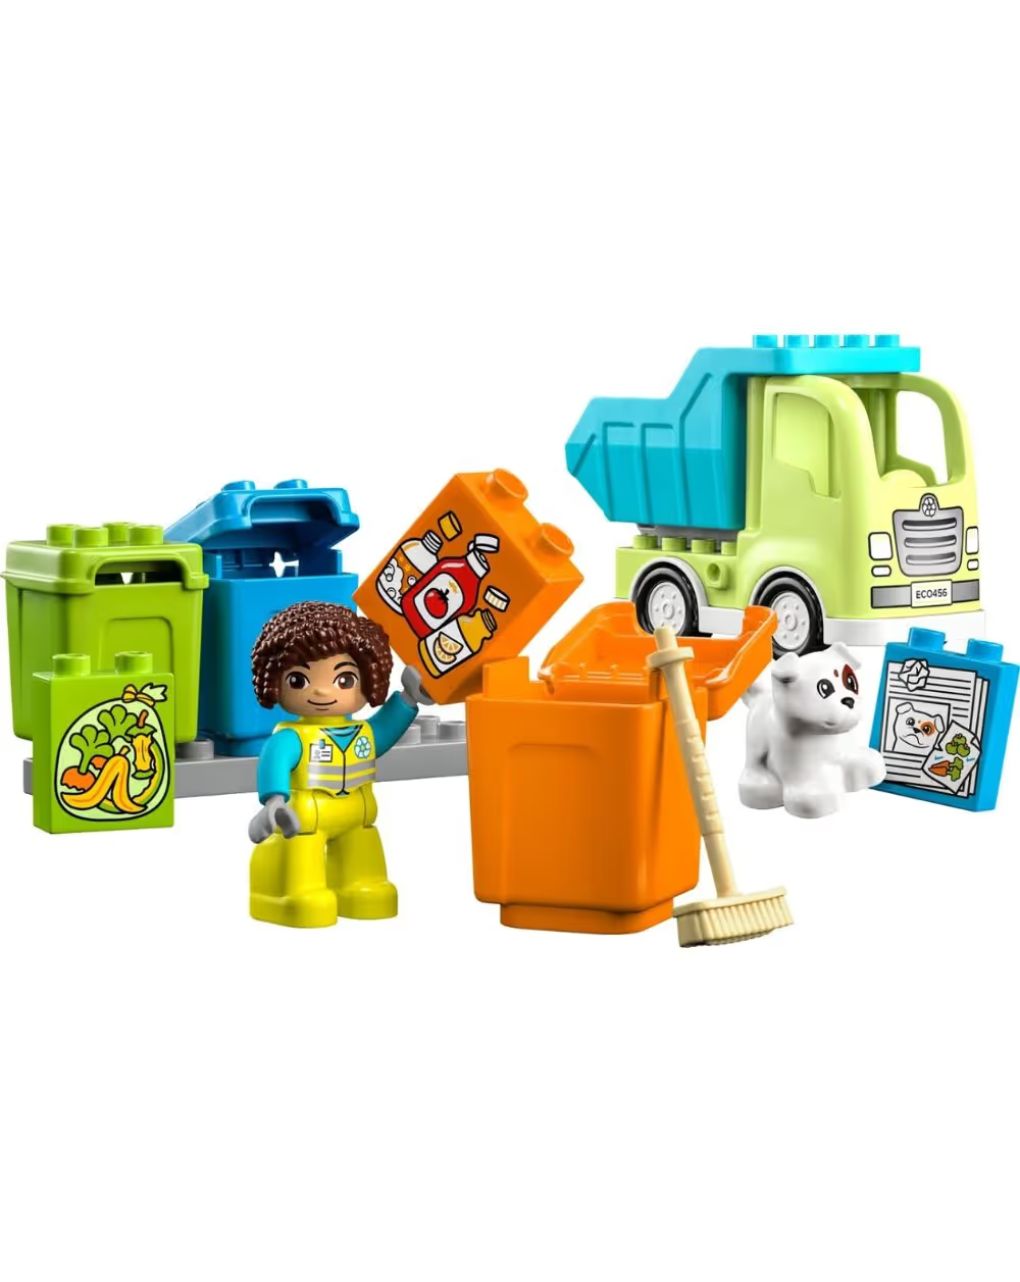 Lego duplo recycling truck 10987 - LEGO DUPLO